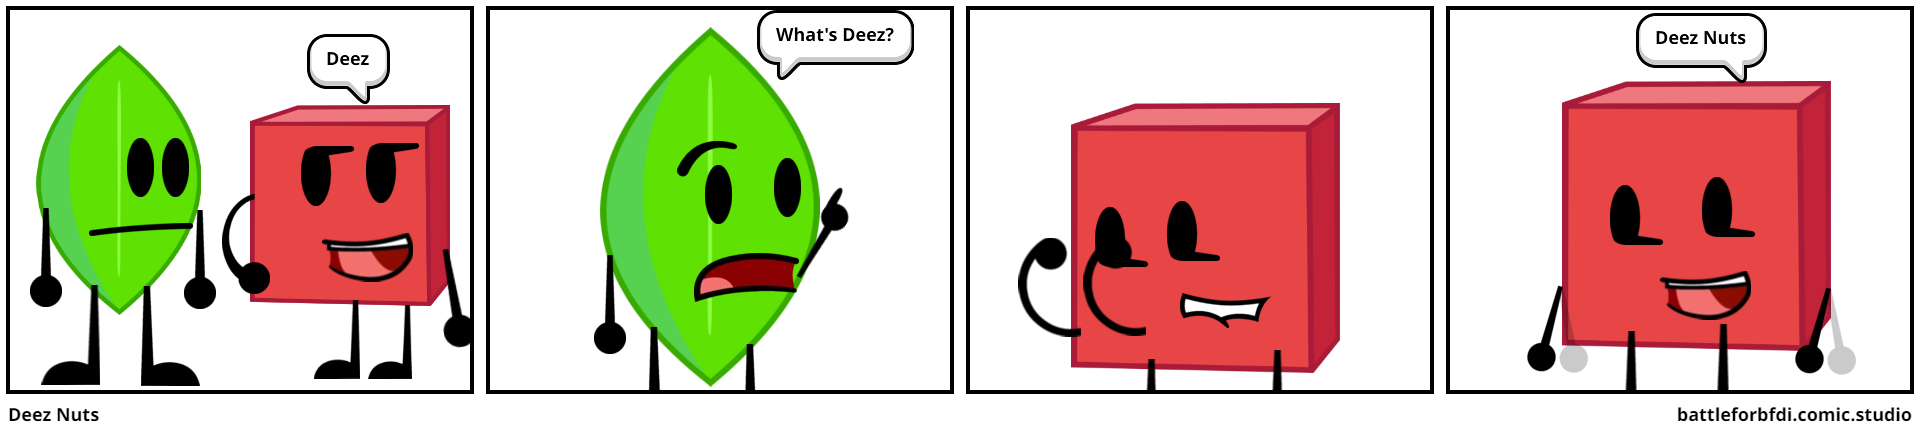 Deep nuts jokes - Comic Studio